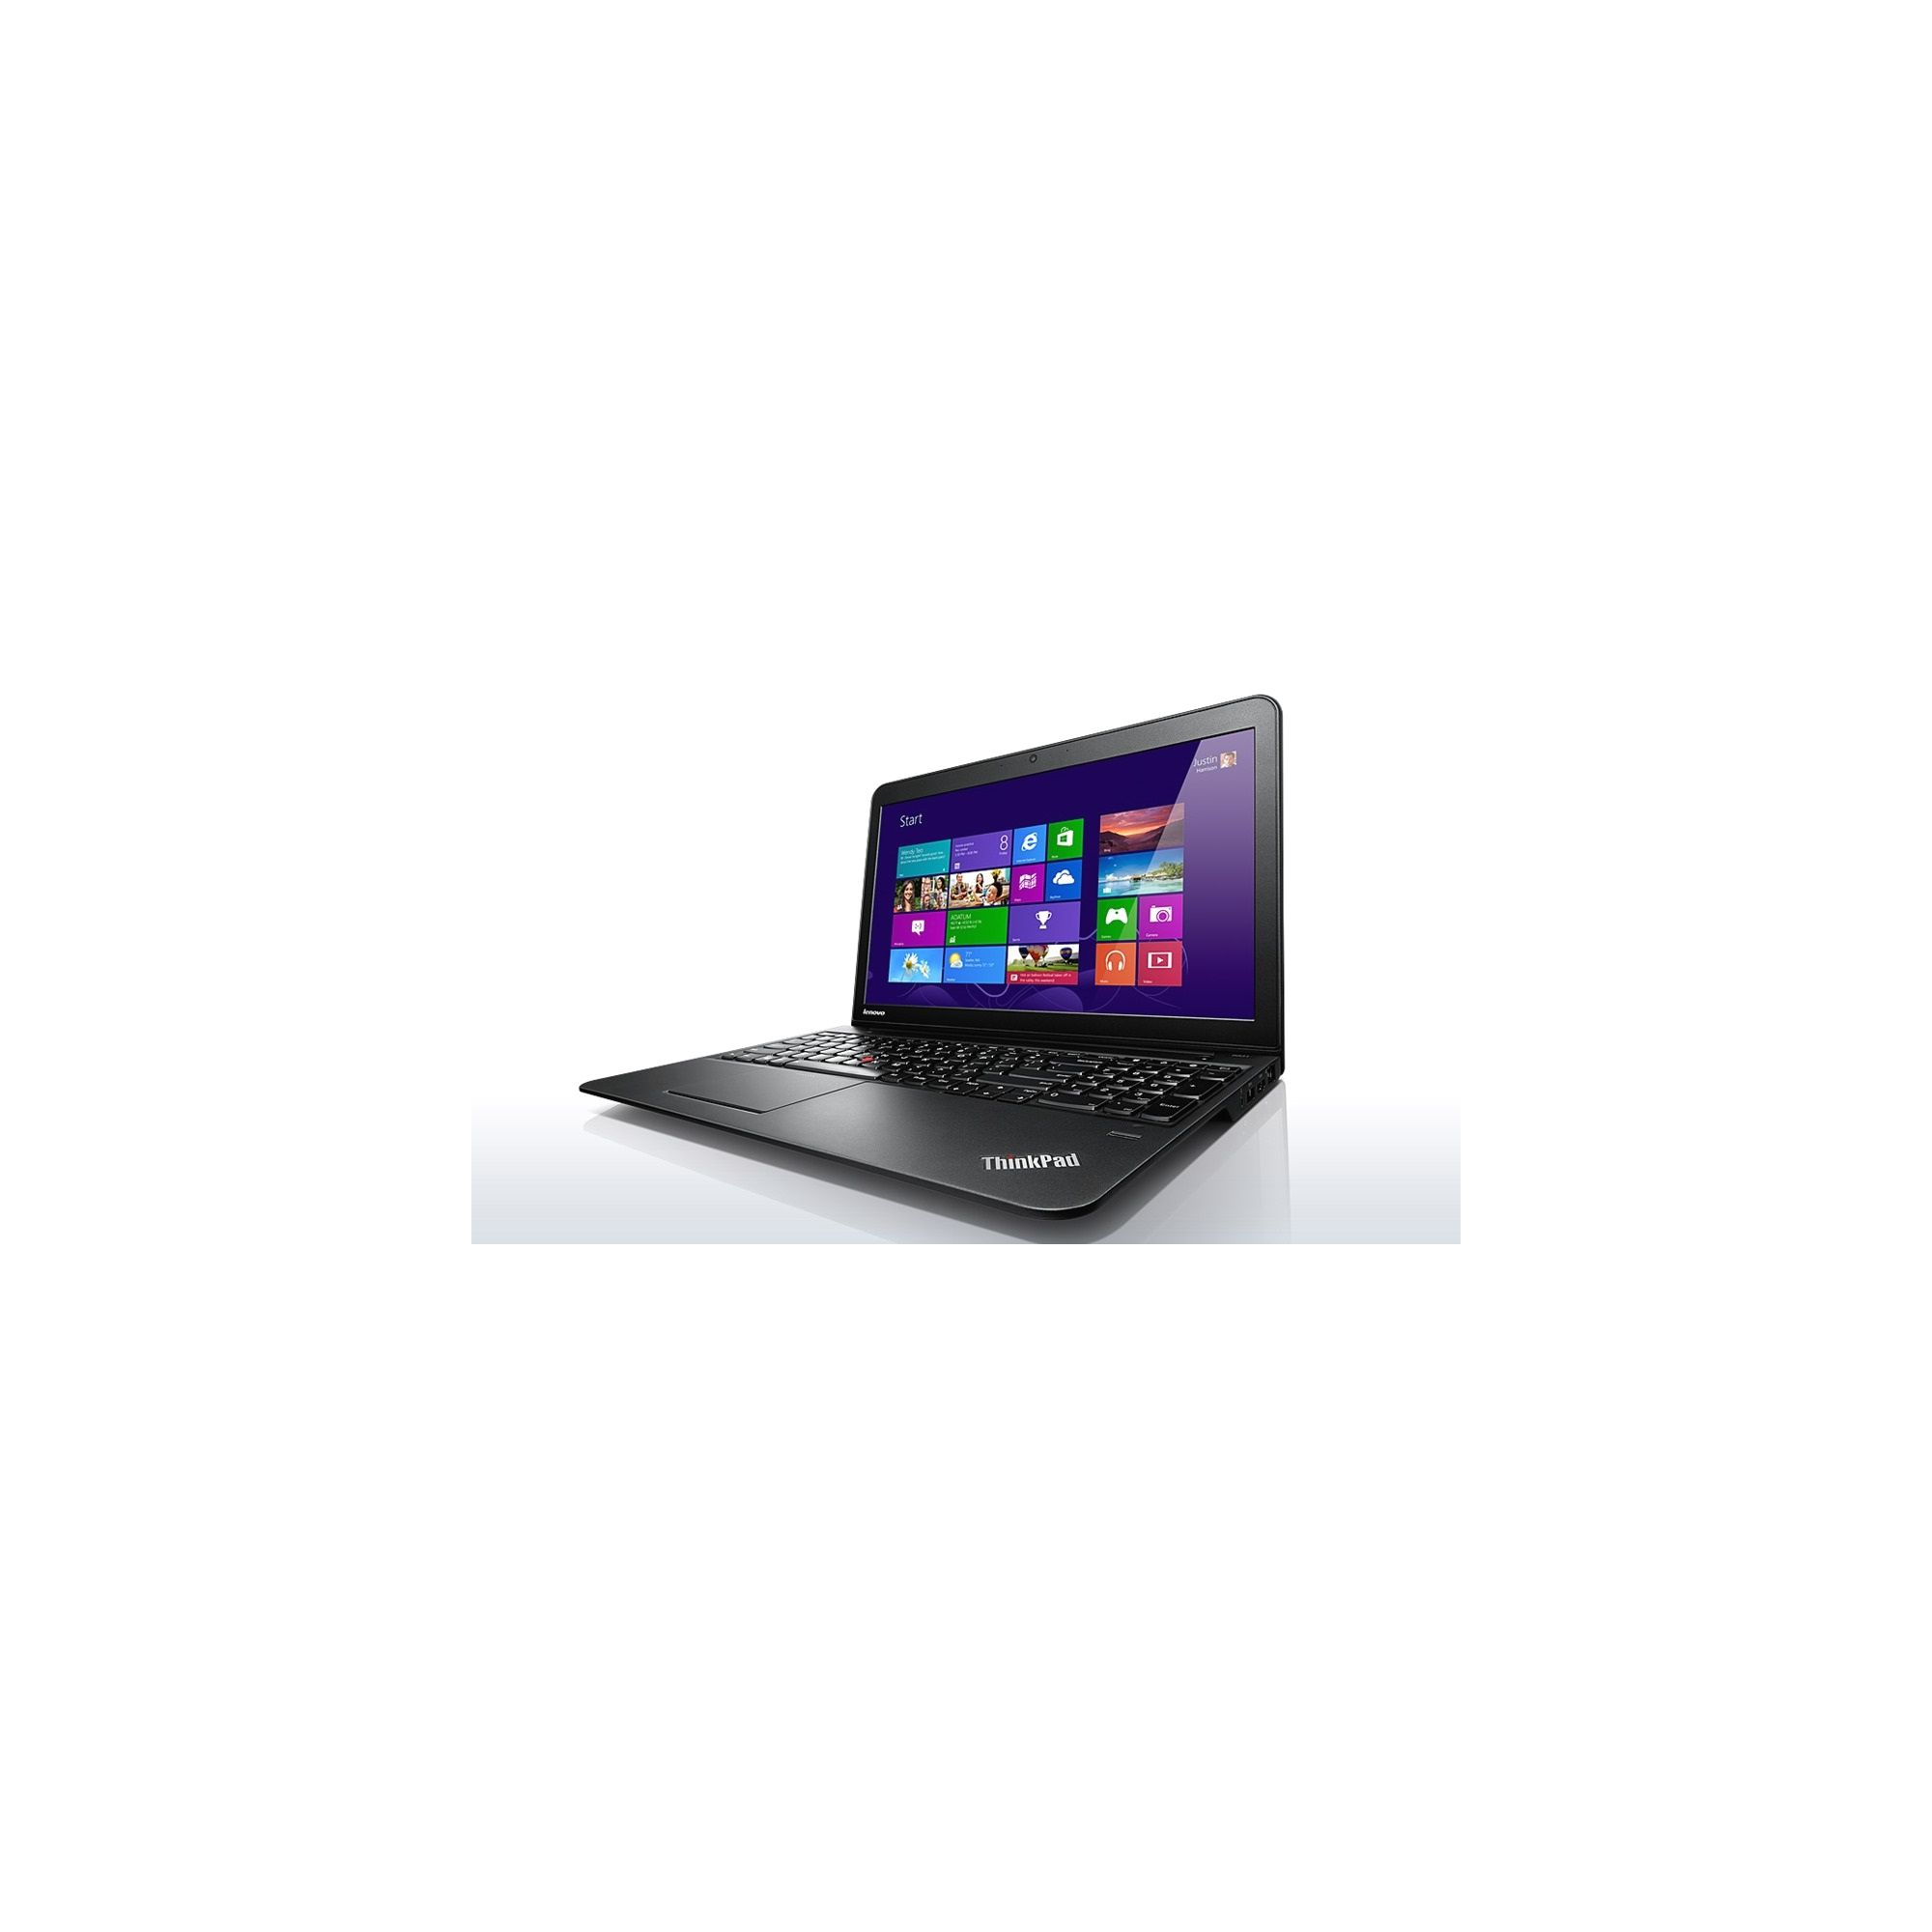 Lenovo ThinkPad Edge S531 3 (15.6 inch) Notebook Core i3 1.9GHz 4GB 500GB Win 7 Pro/Wins 8 Pro RDVD (Intel HD Graphics)